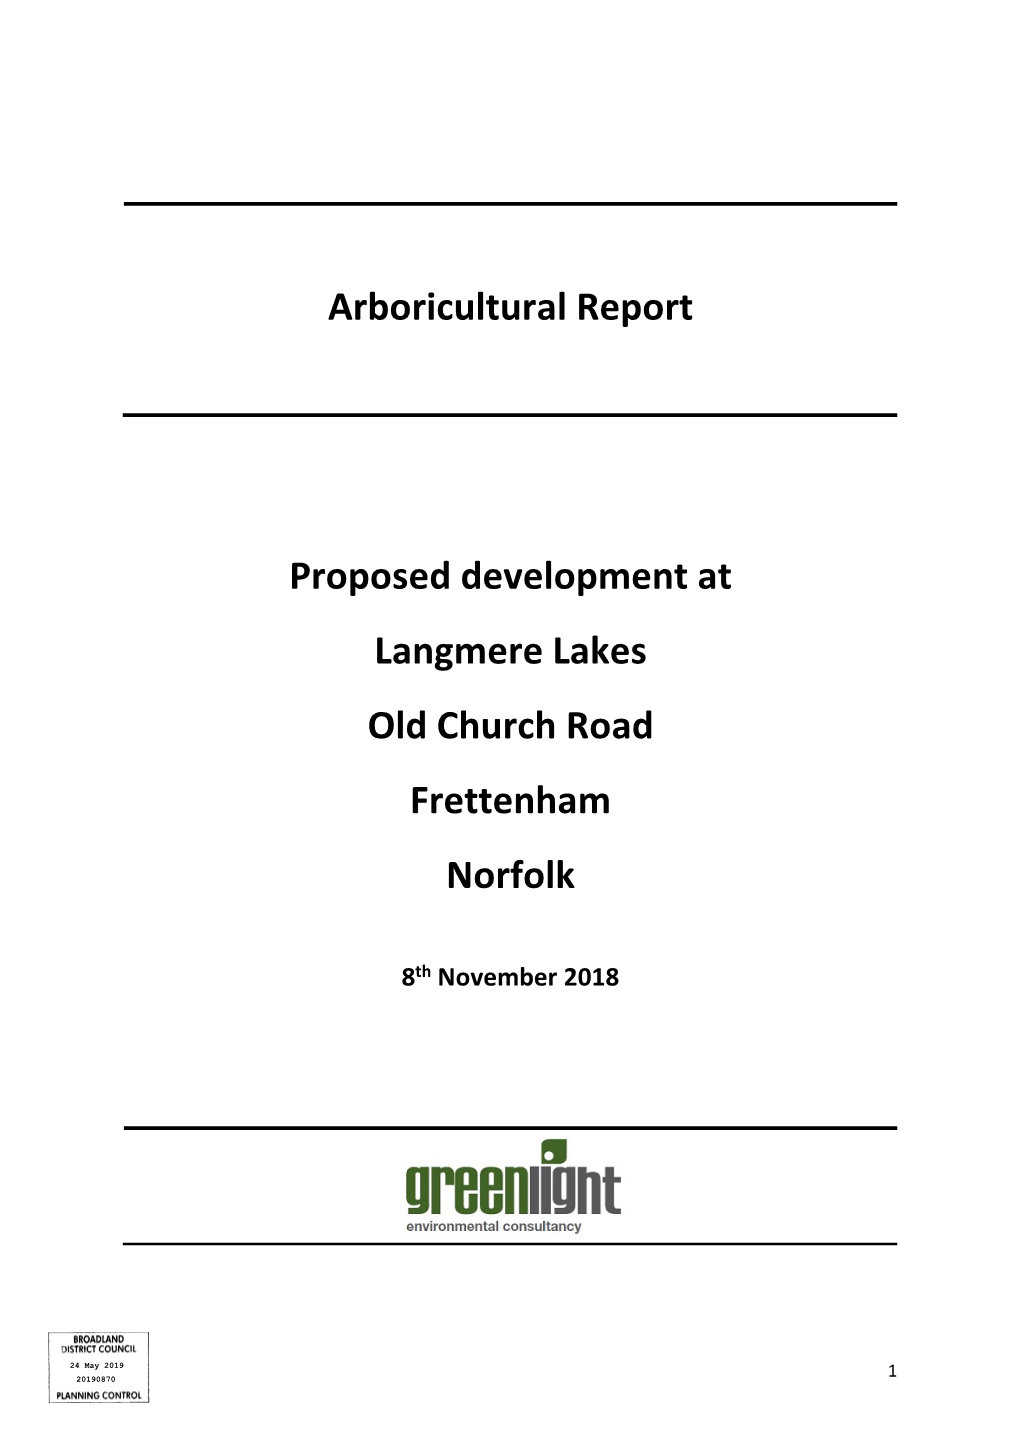 Proposed Development at Langmere Lakes Old Church Road Frettenham Norfolk